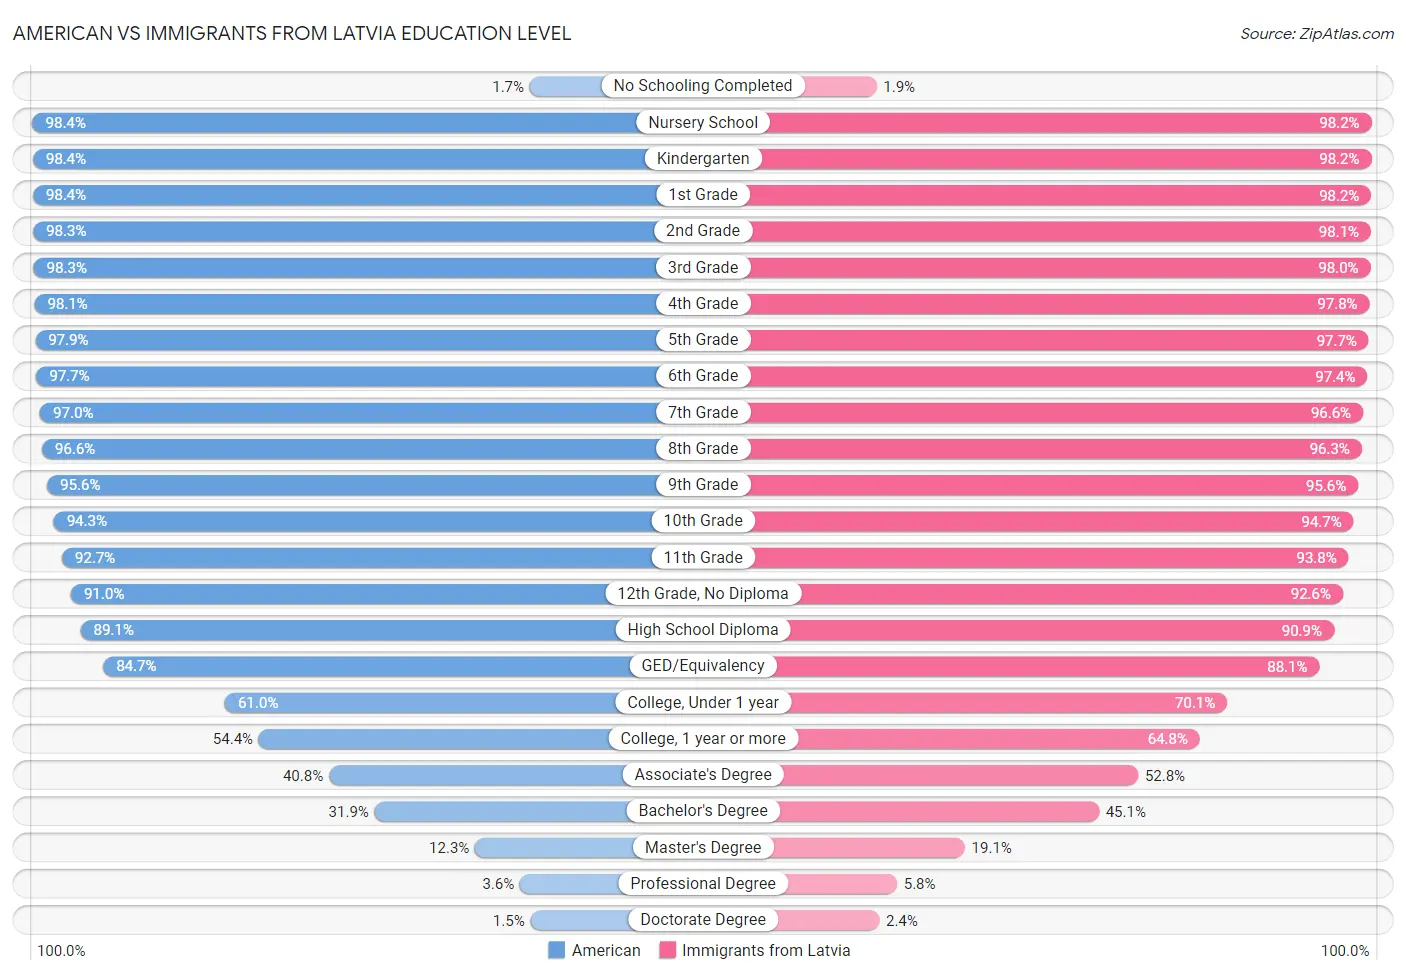 American vs Immigrants from Latvia Education Level